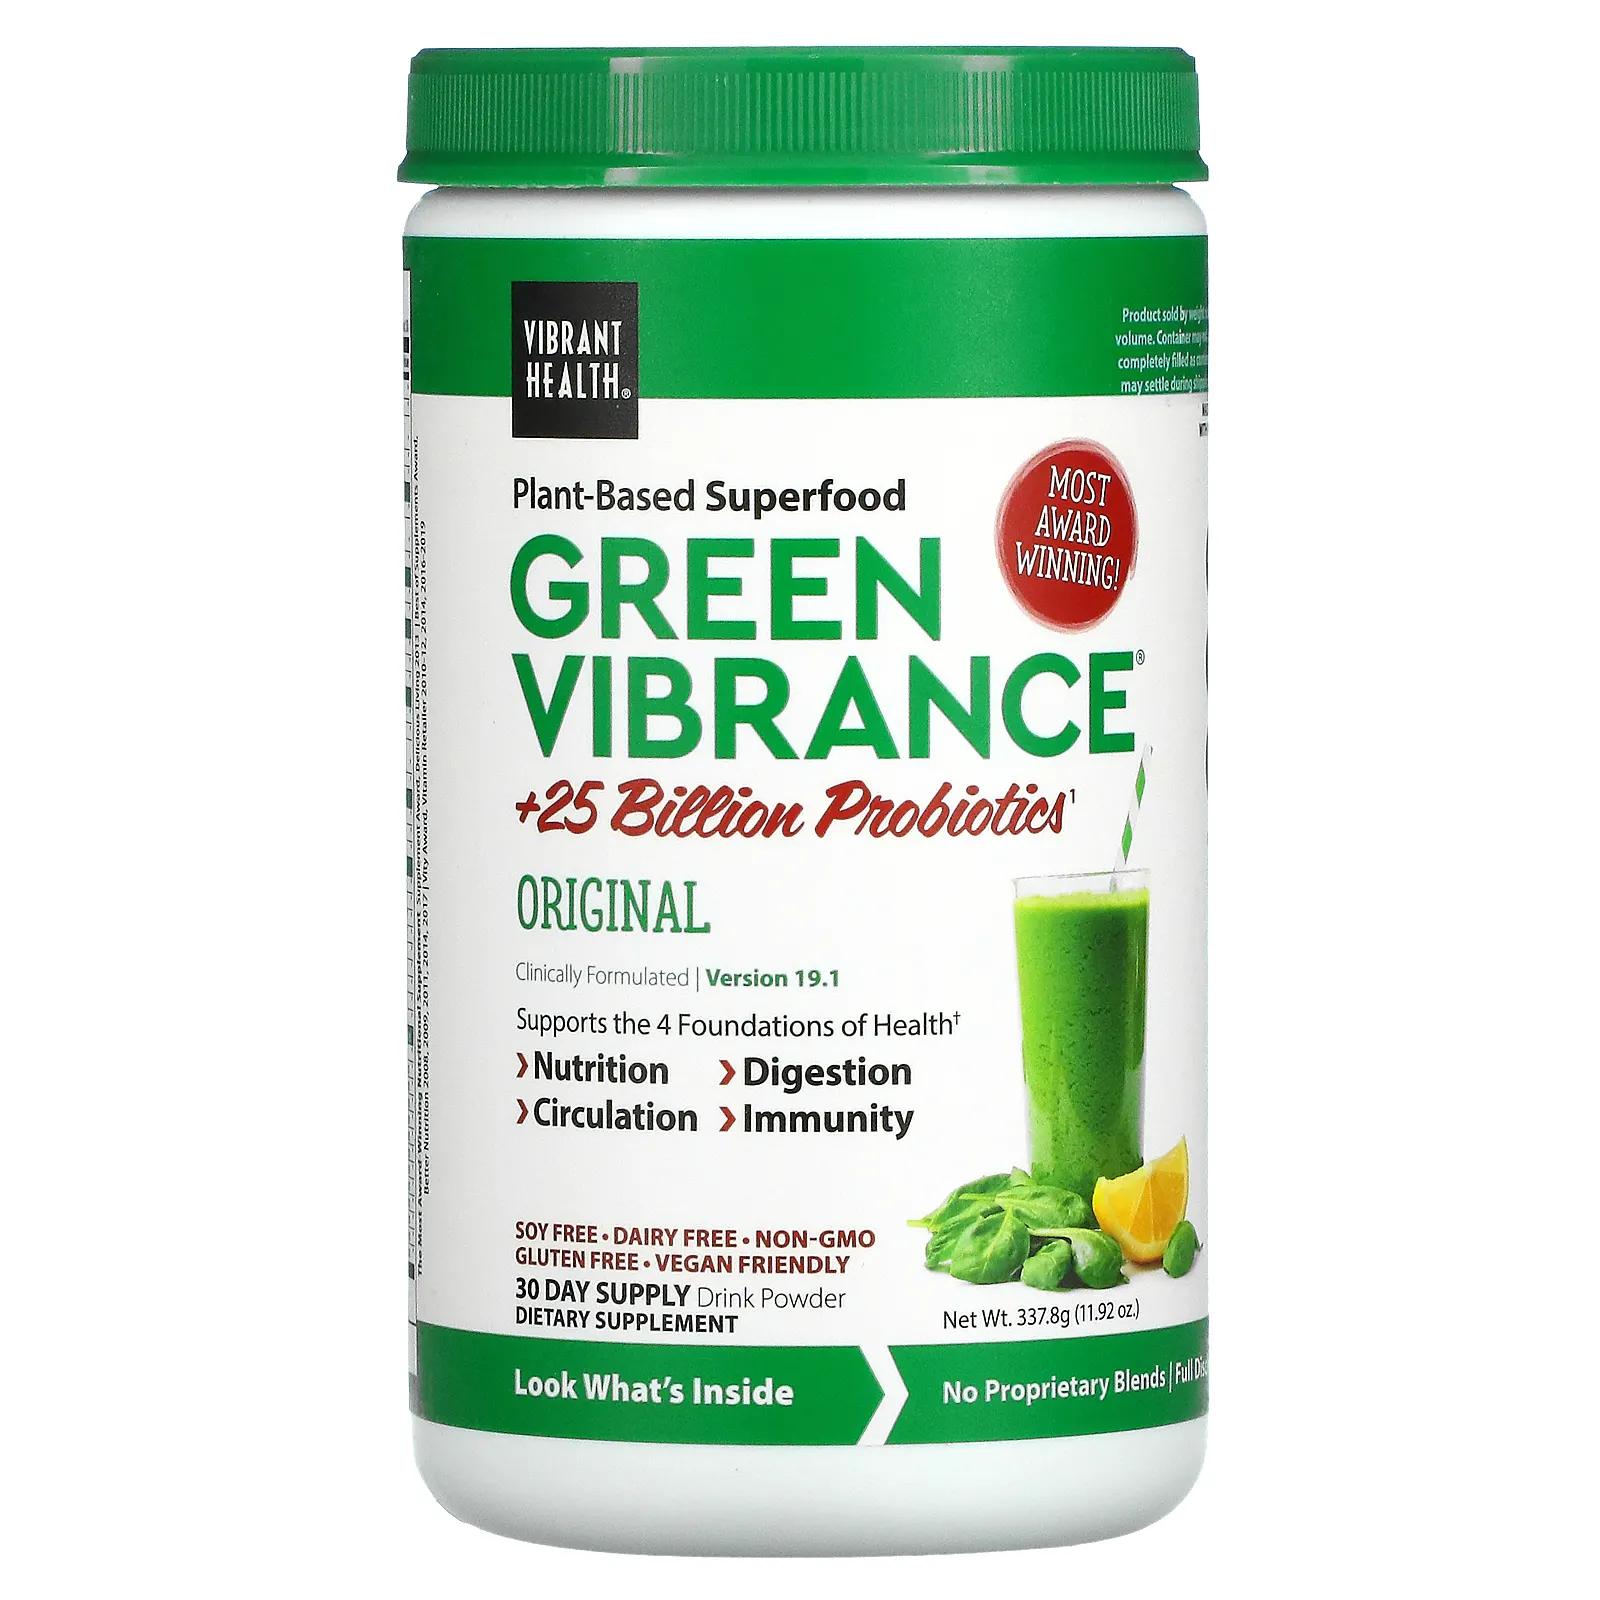 Vibrant Health Green Vibrance + + 25 миллиардов пробиотиков версия 16.0 12,5 унций (354,9 г)